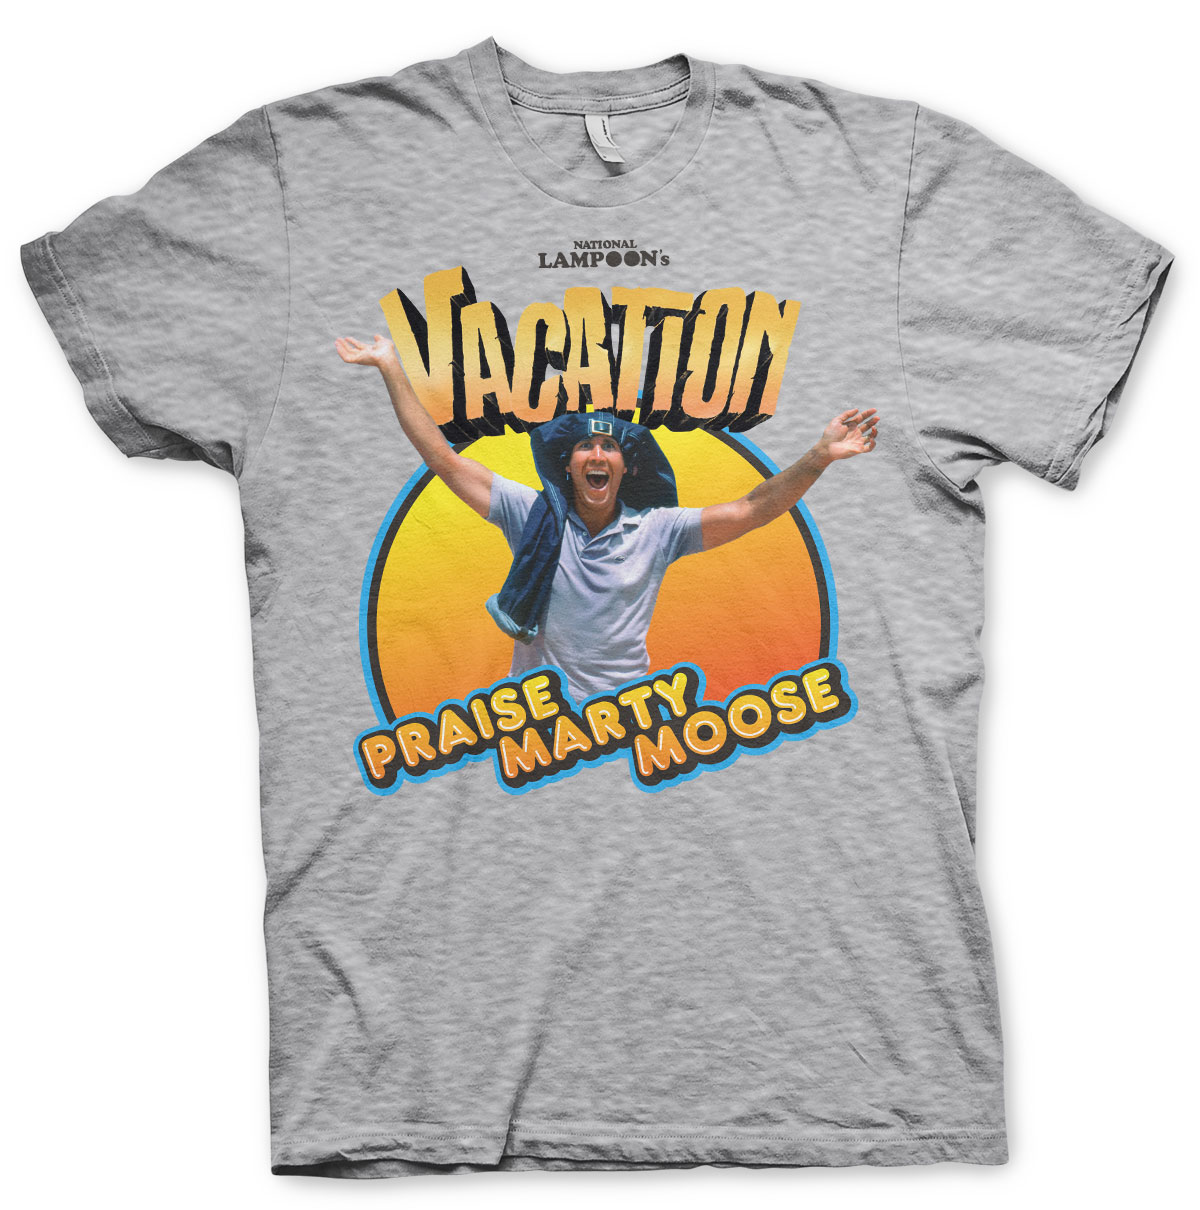 Praise Marty Moose T-Shirt